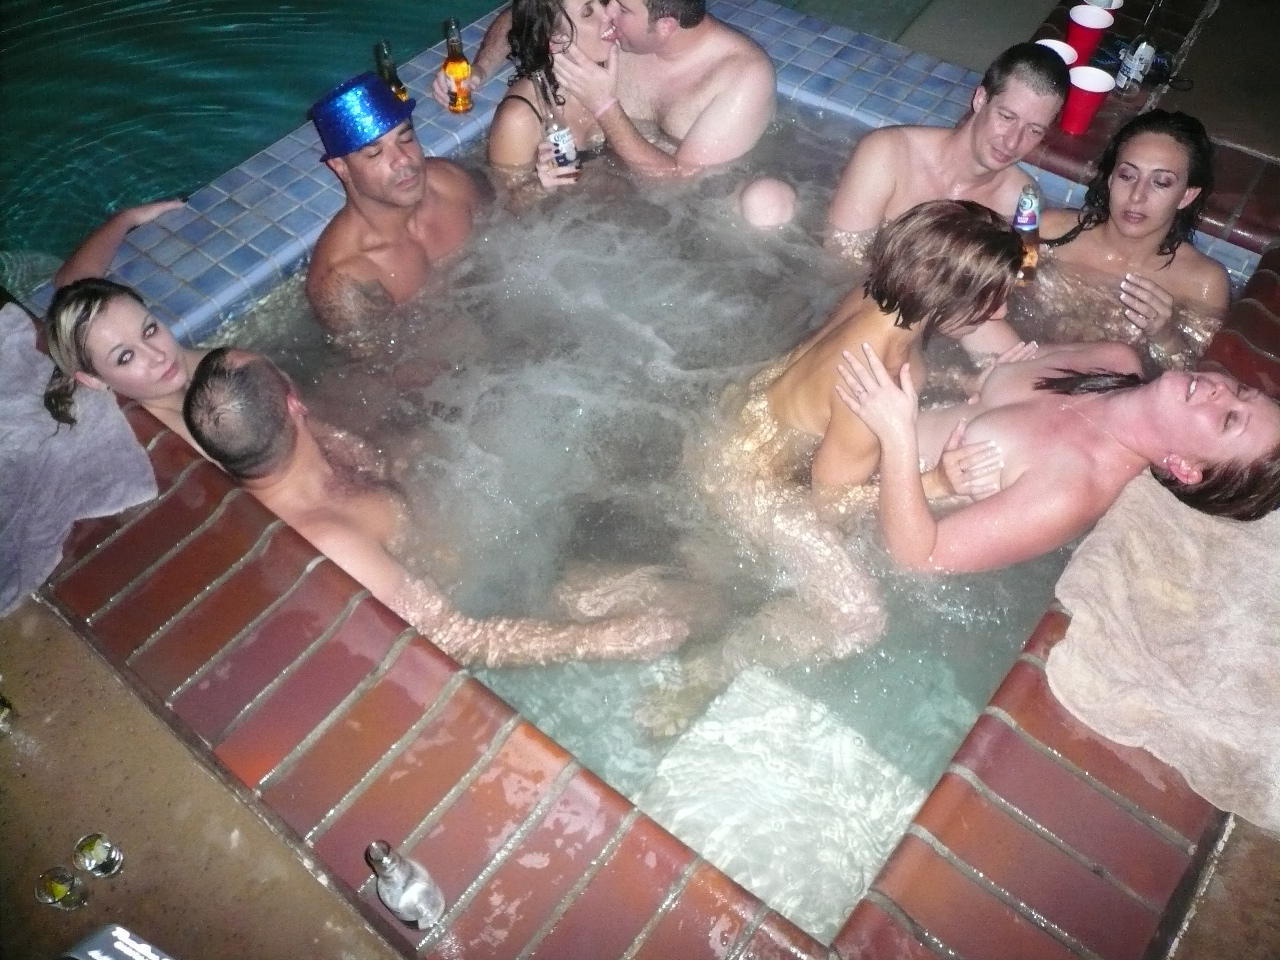 Hot tub sex party